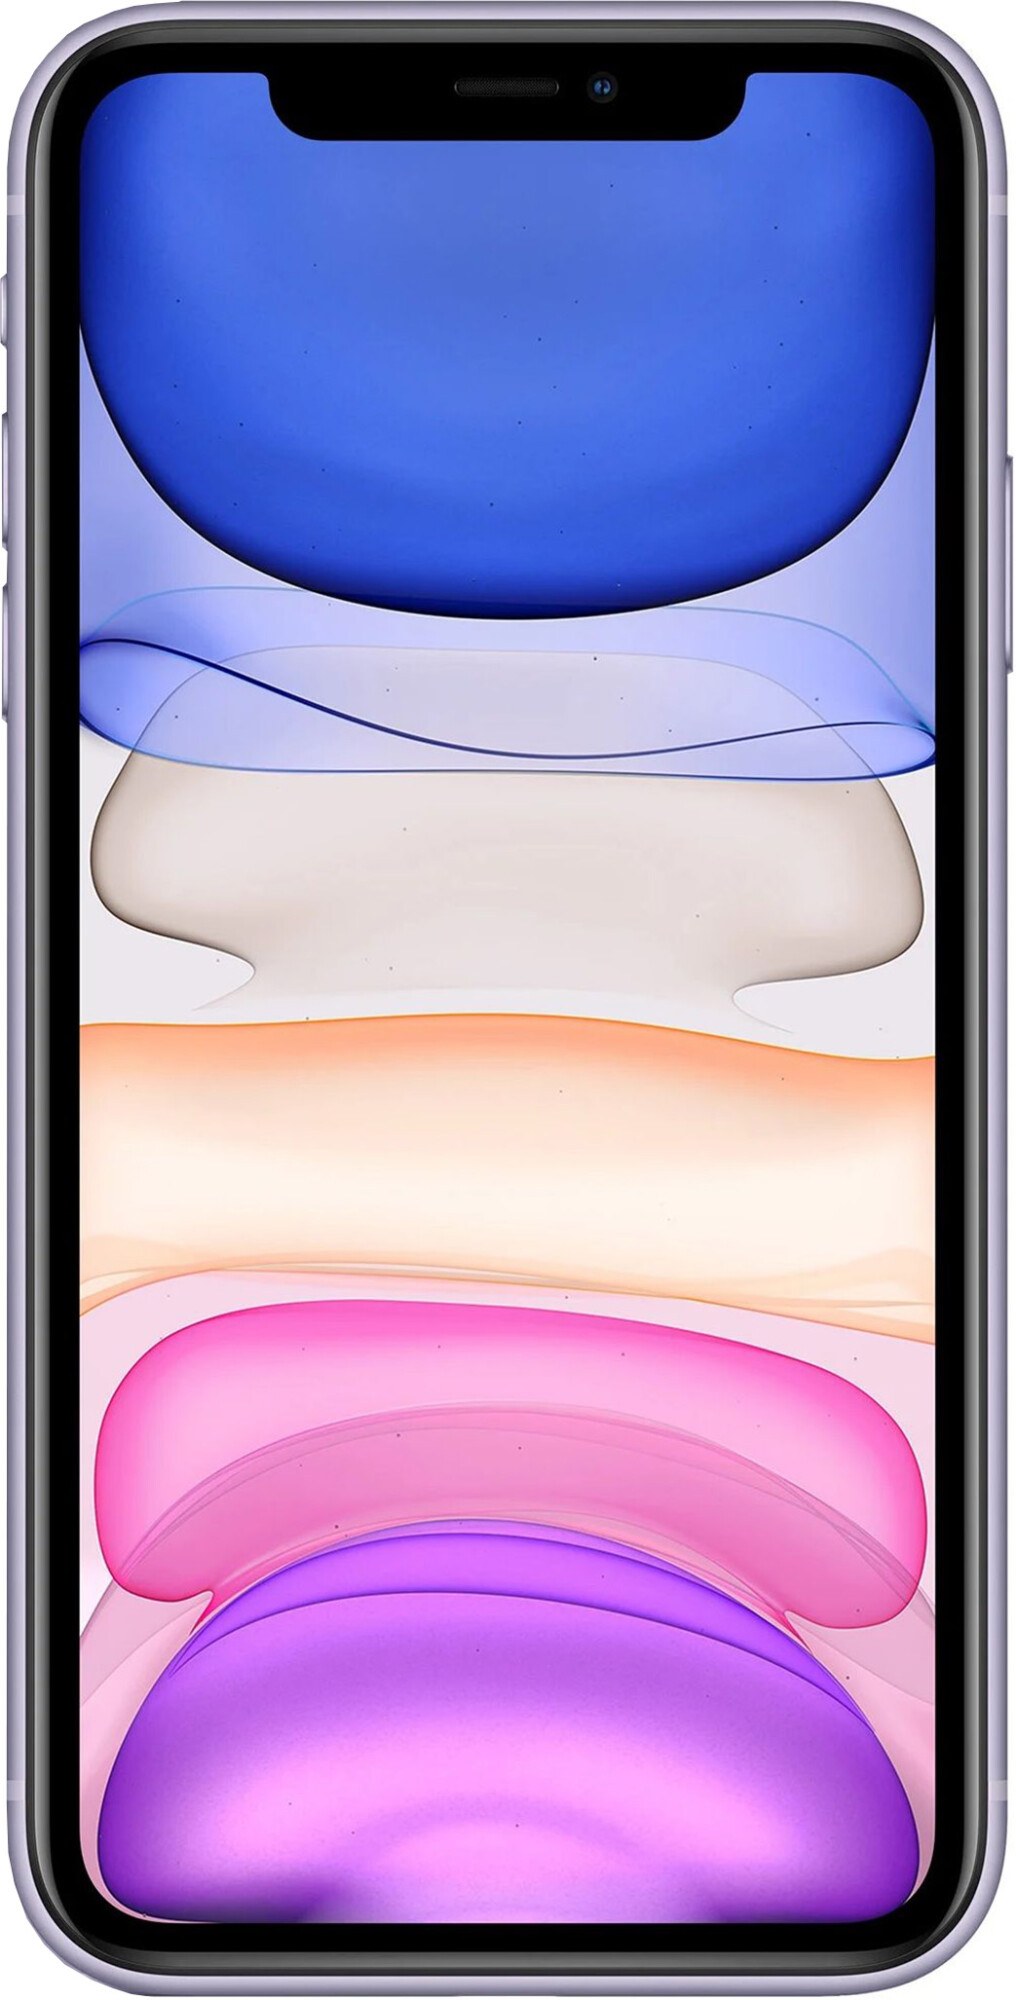 Apple iPhone 11 128GB Dual Sim Purple (MWND2)